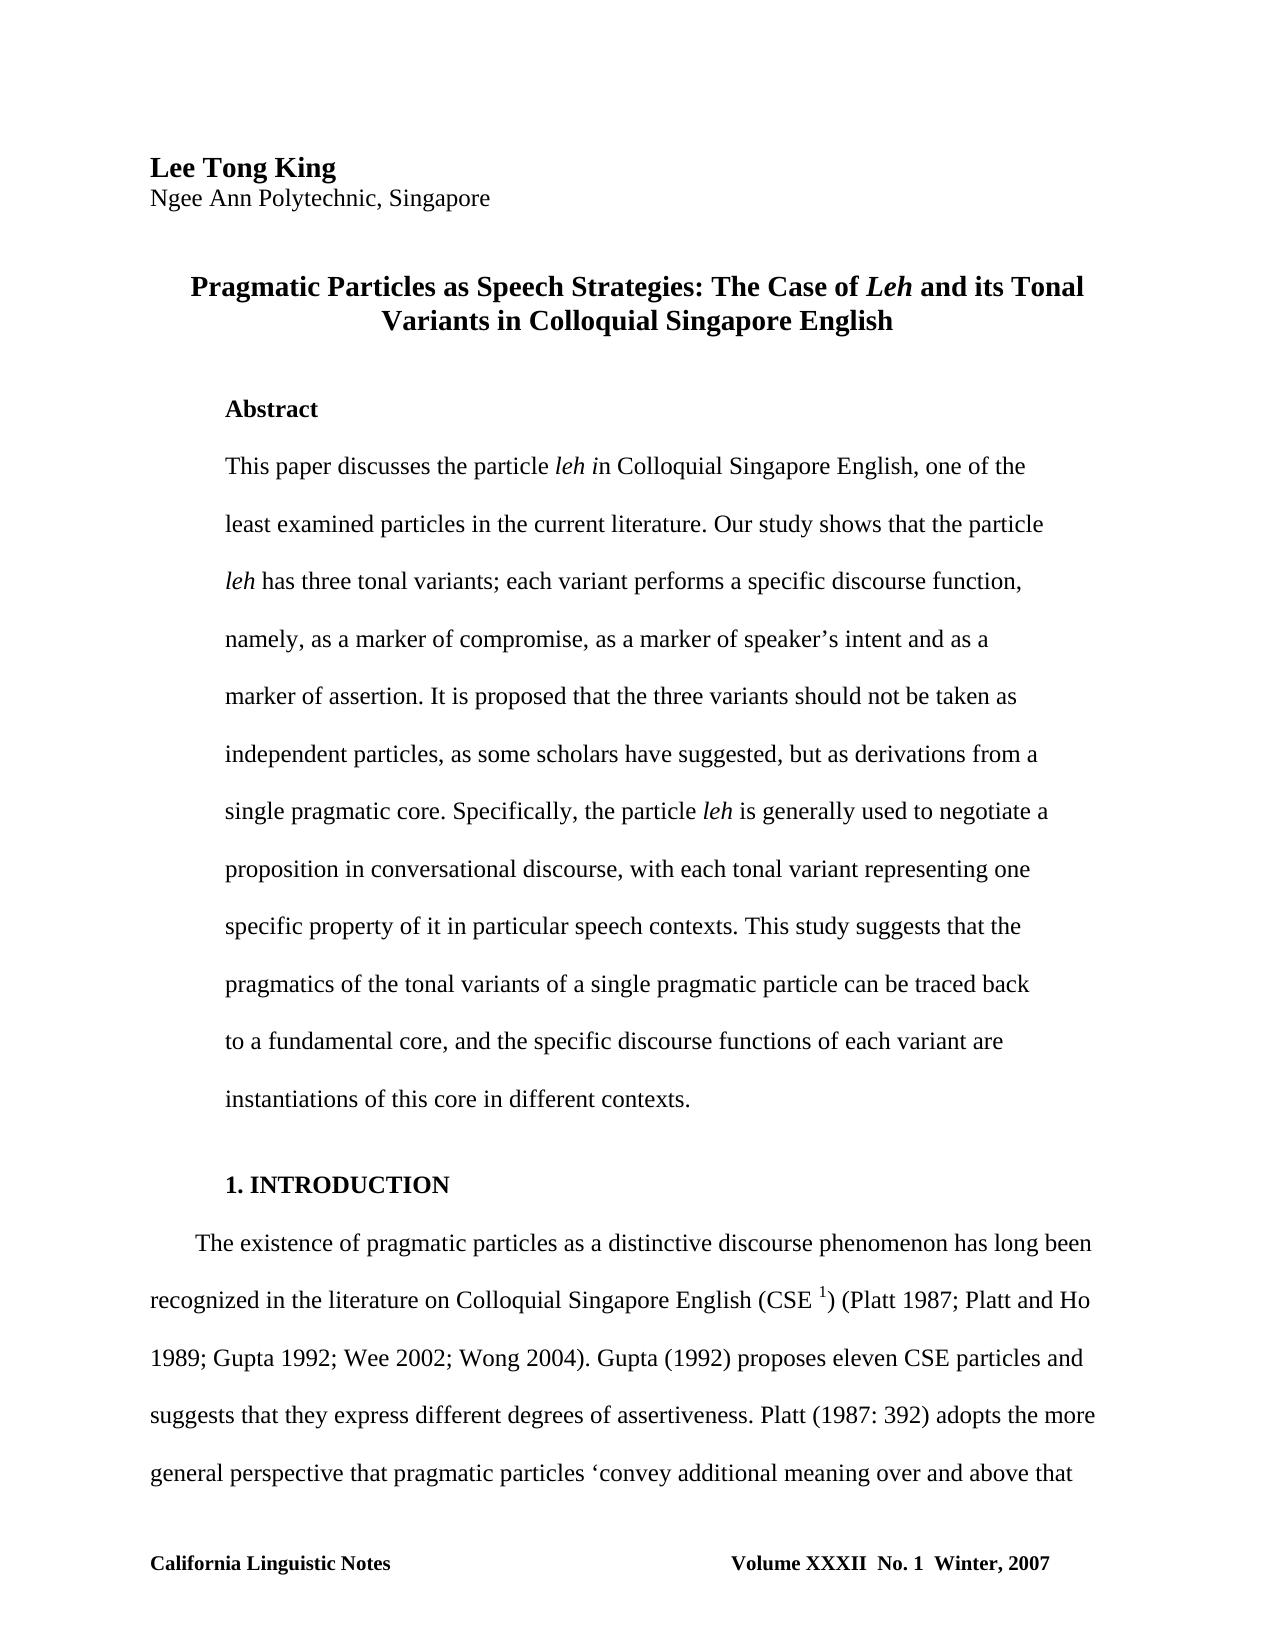 Microsoft Word - Pragmatic Particles as Speech Strategies_revised-1R.doc